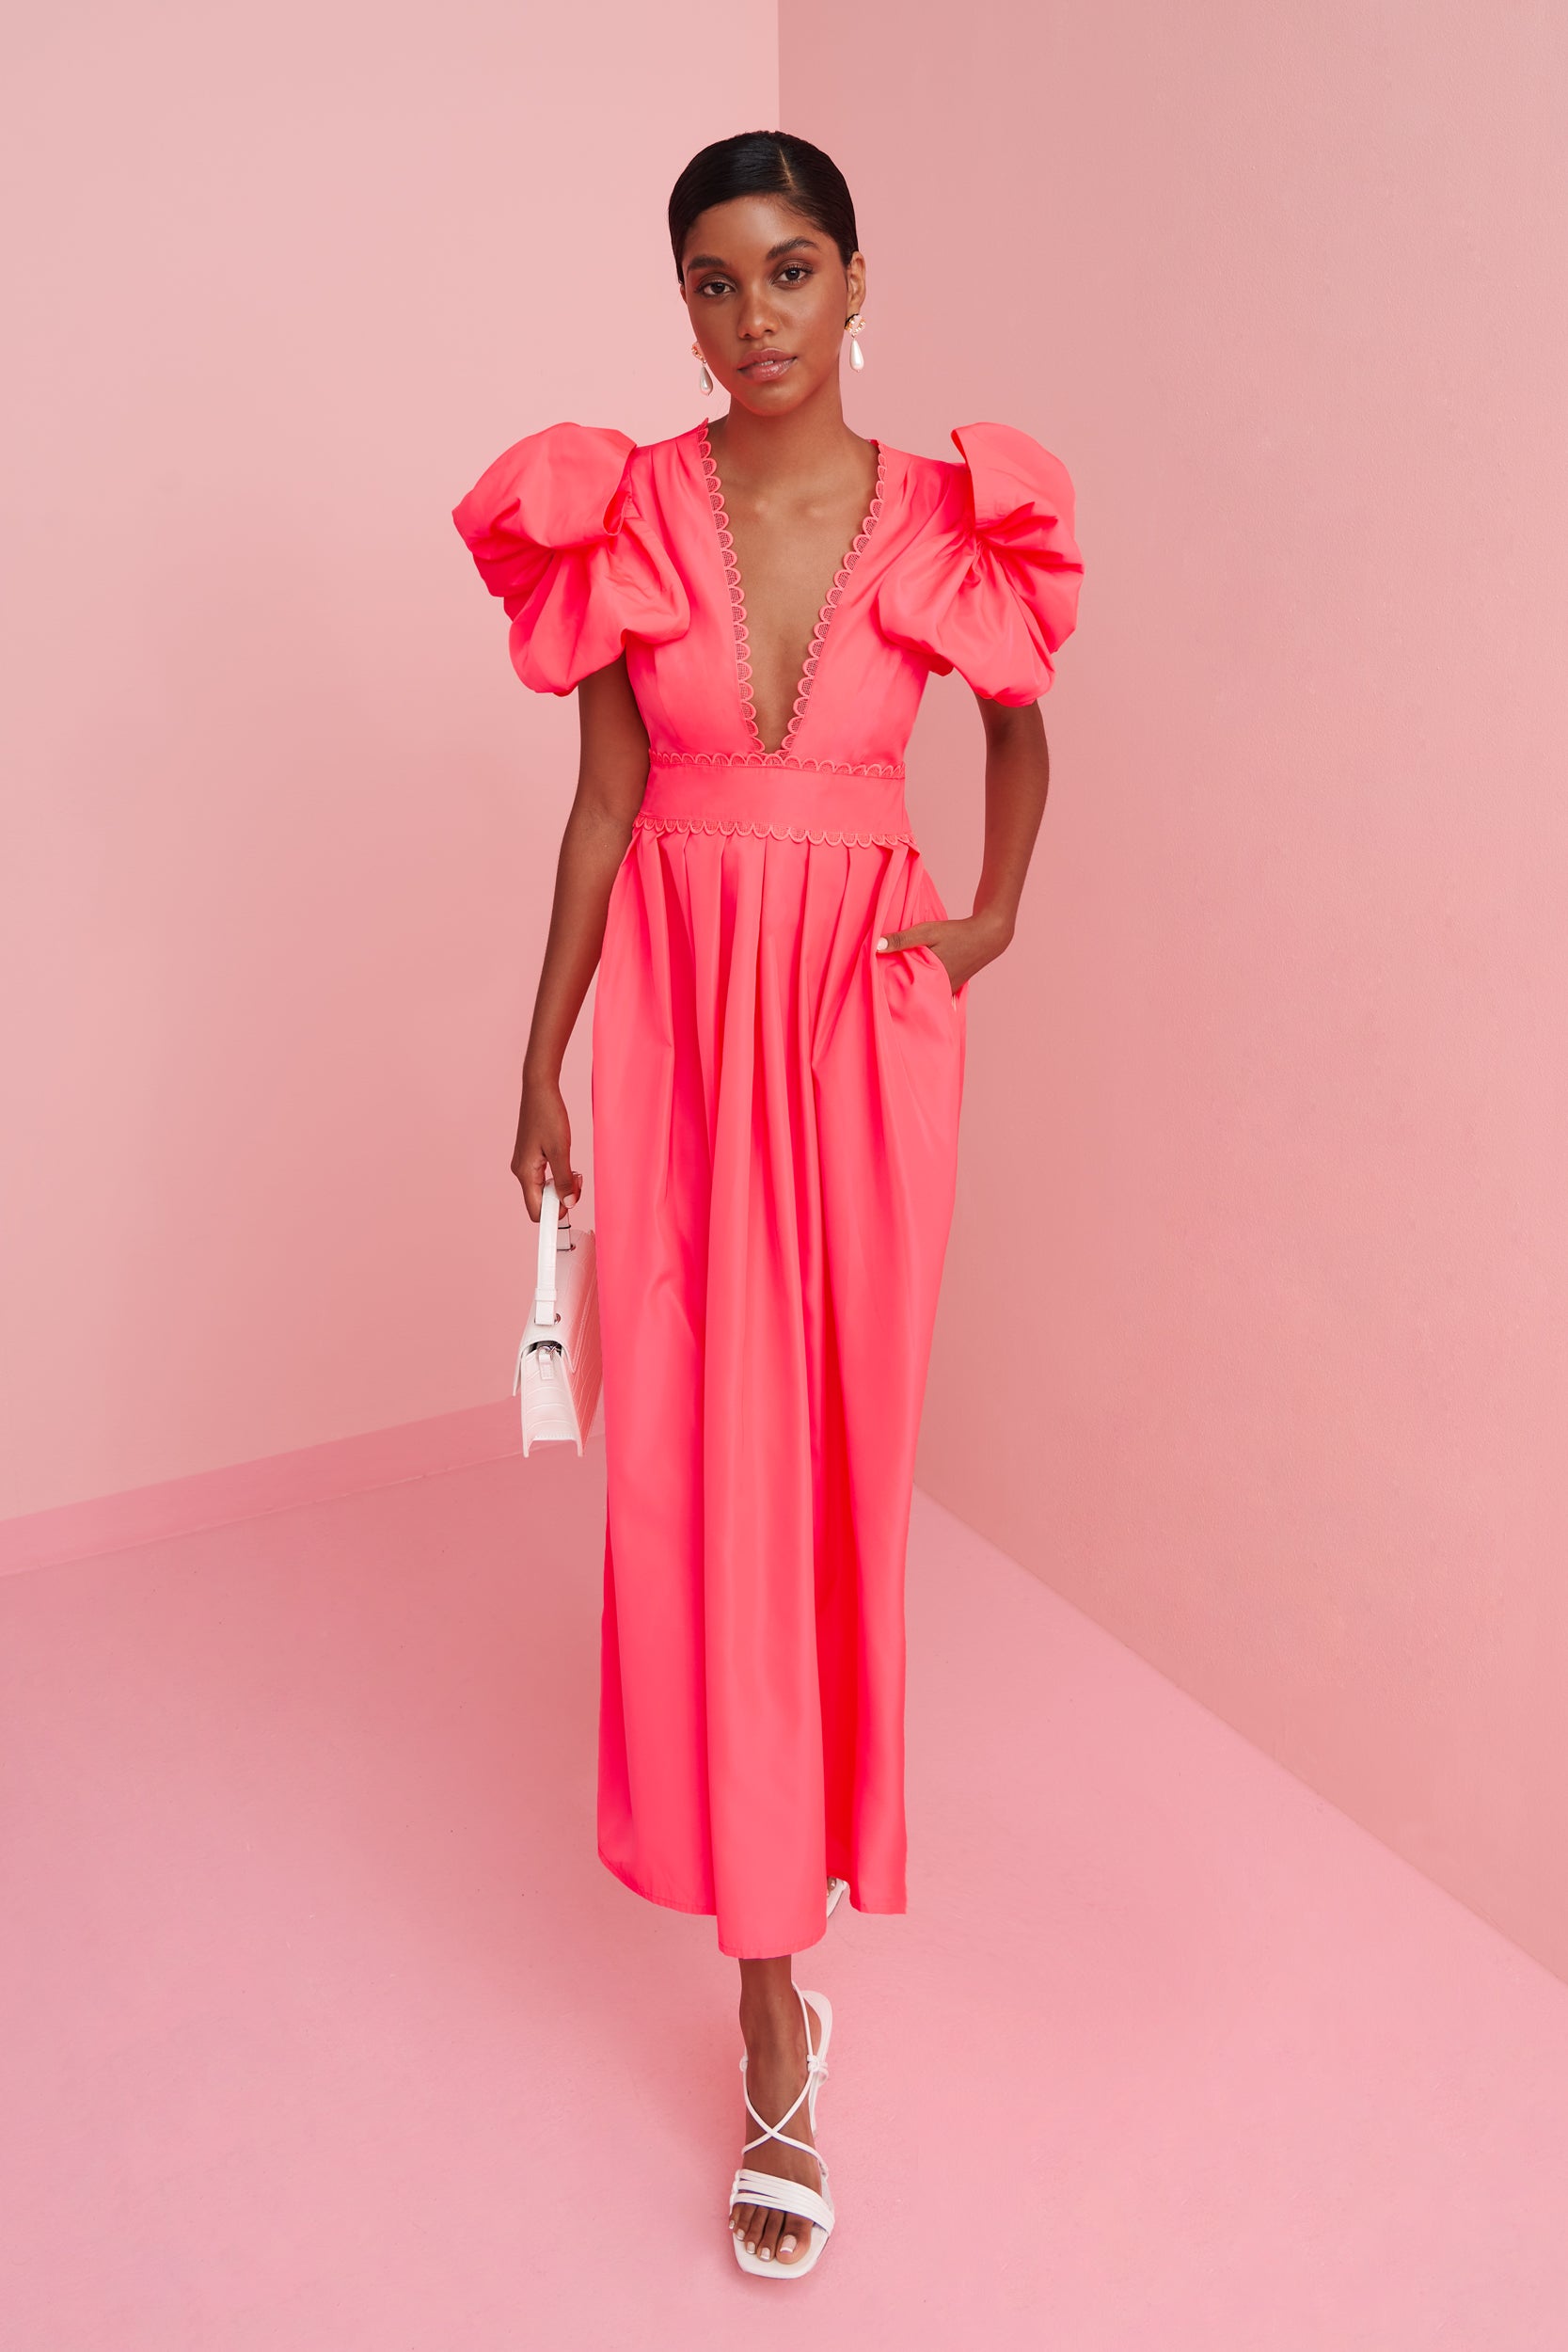 Celia B-Curazao Dress Neon Pink-Justbrazil